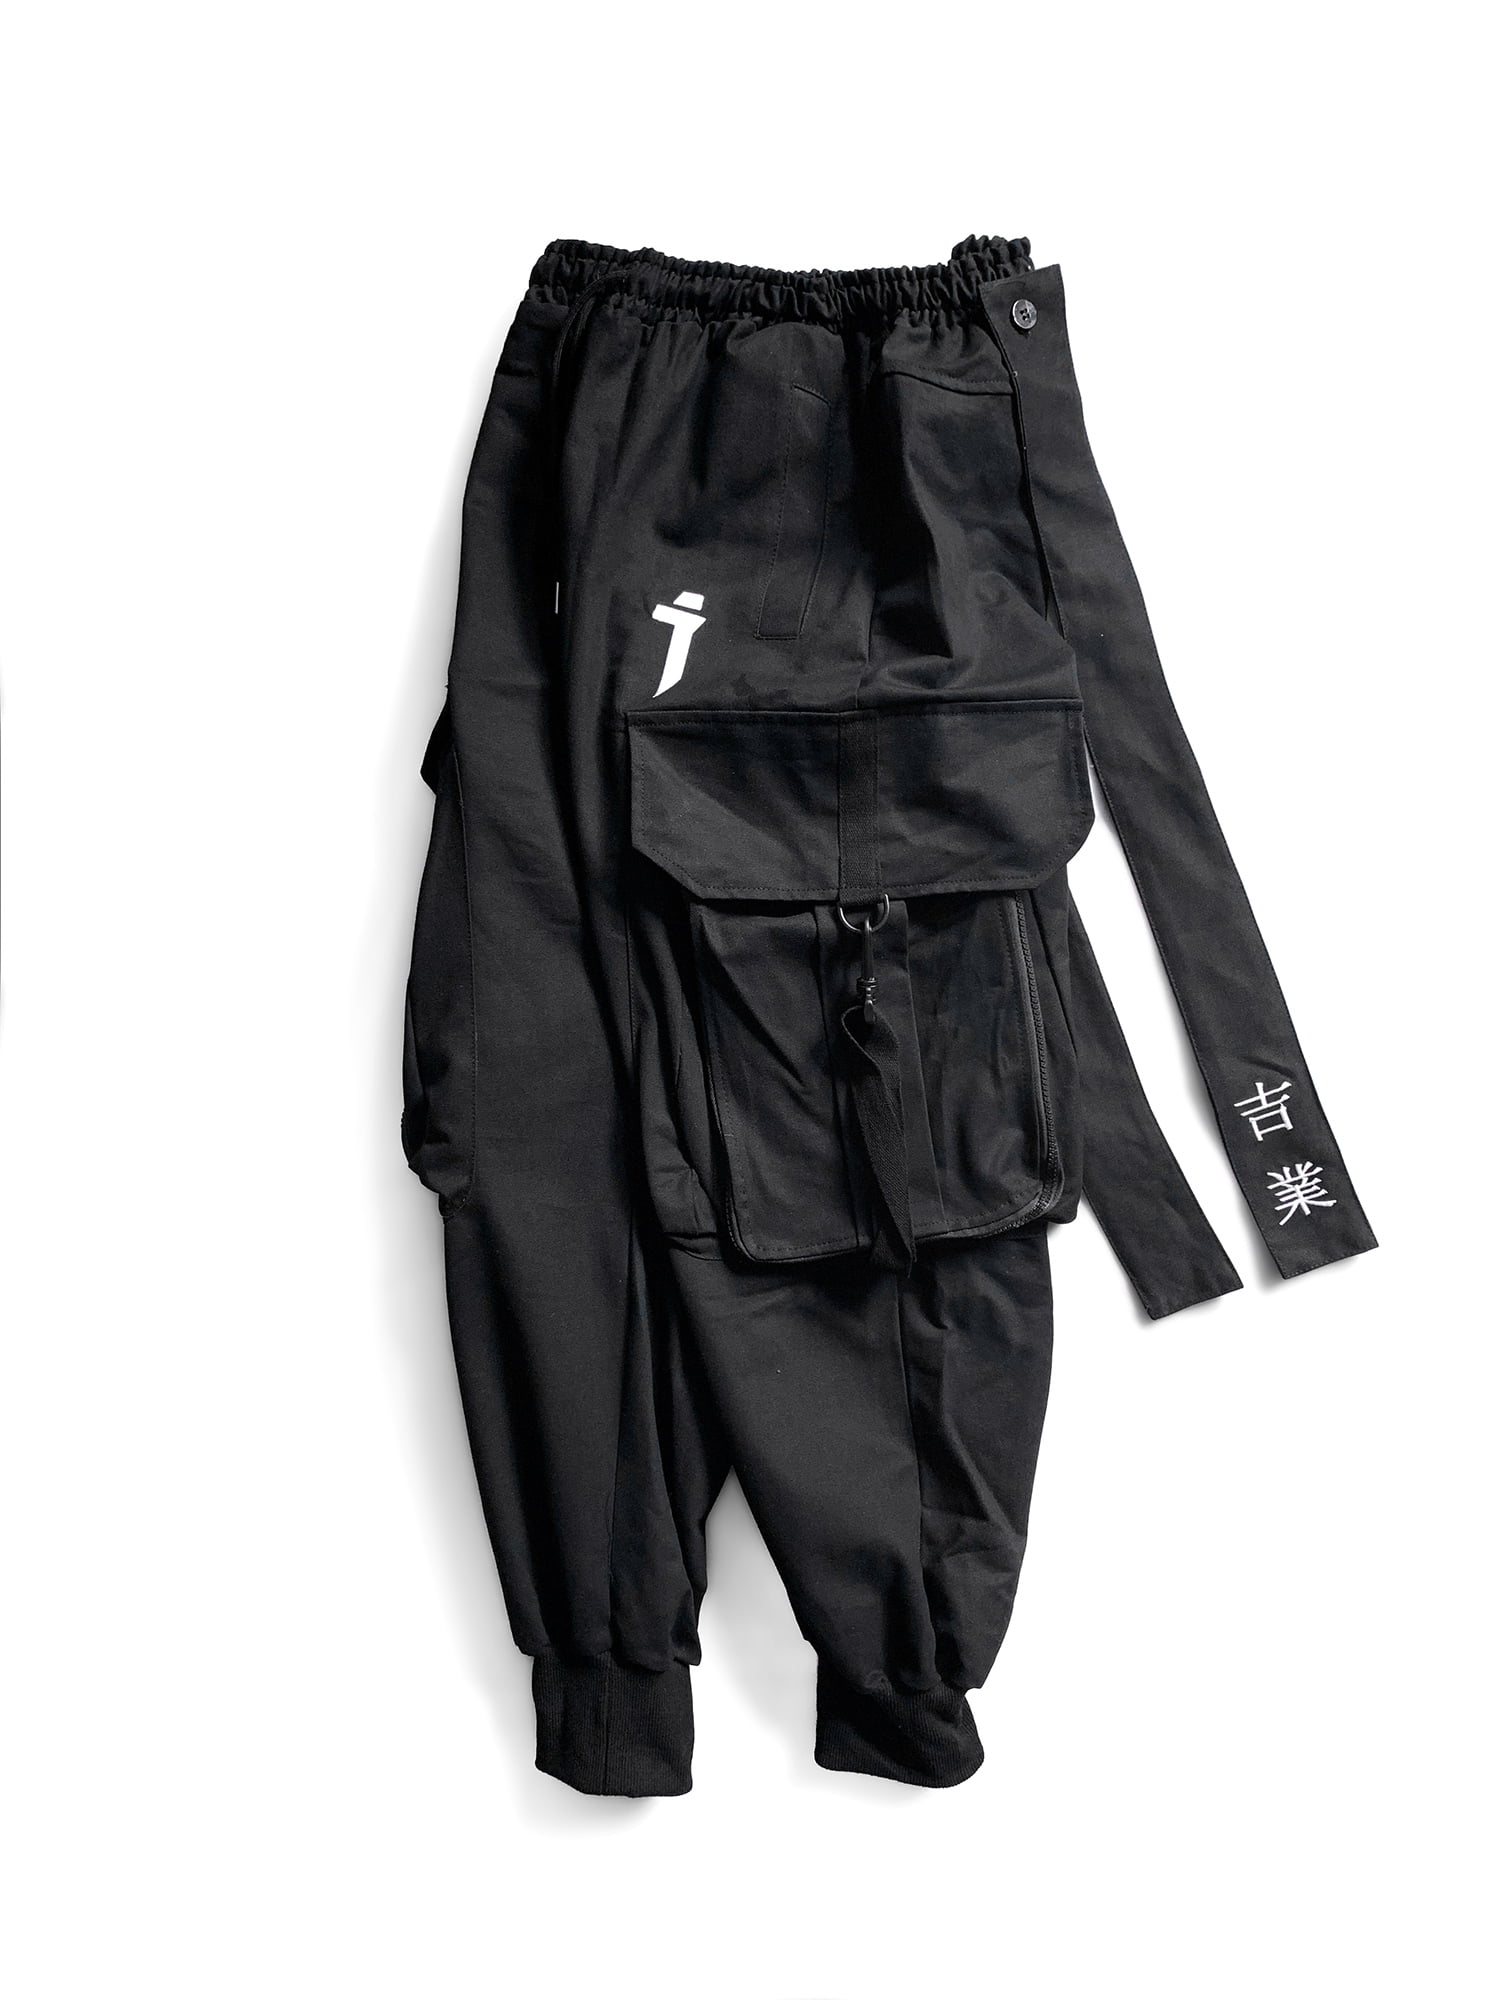 Niepce Inc Japanese Streetwear Men's Cargo Pants (Black-821, s) at   Men's Clothing store